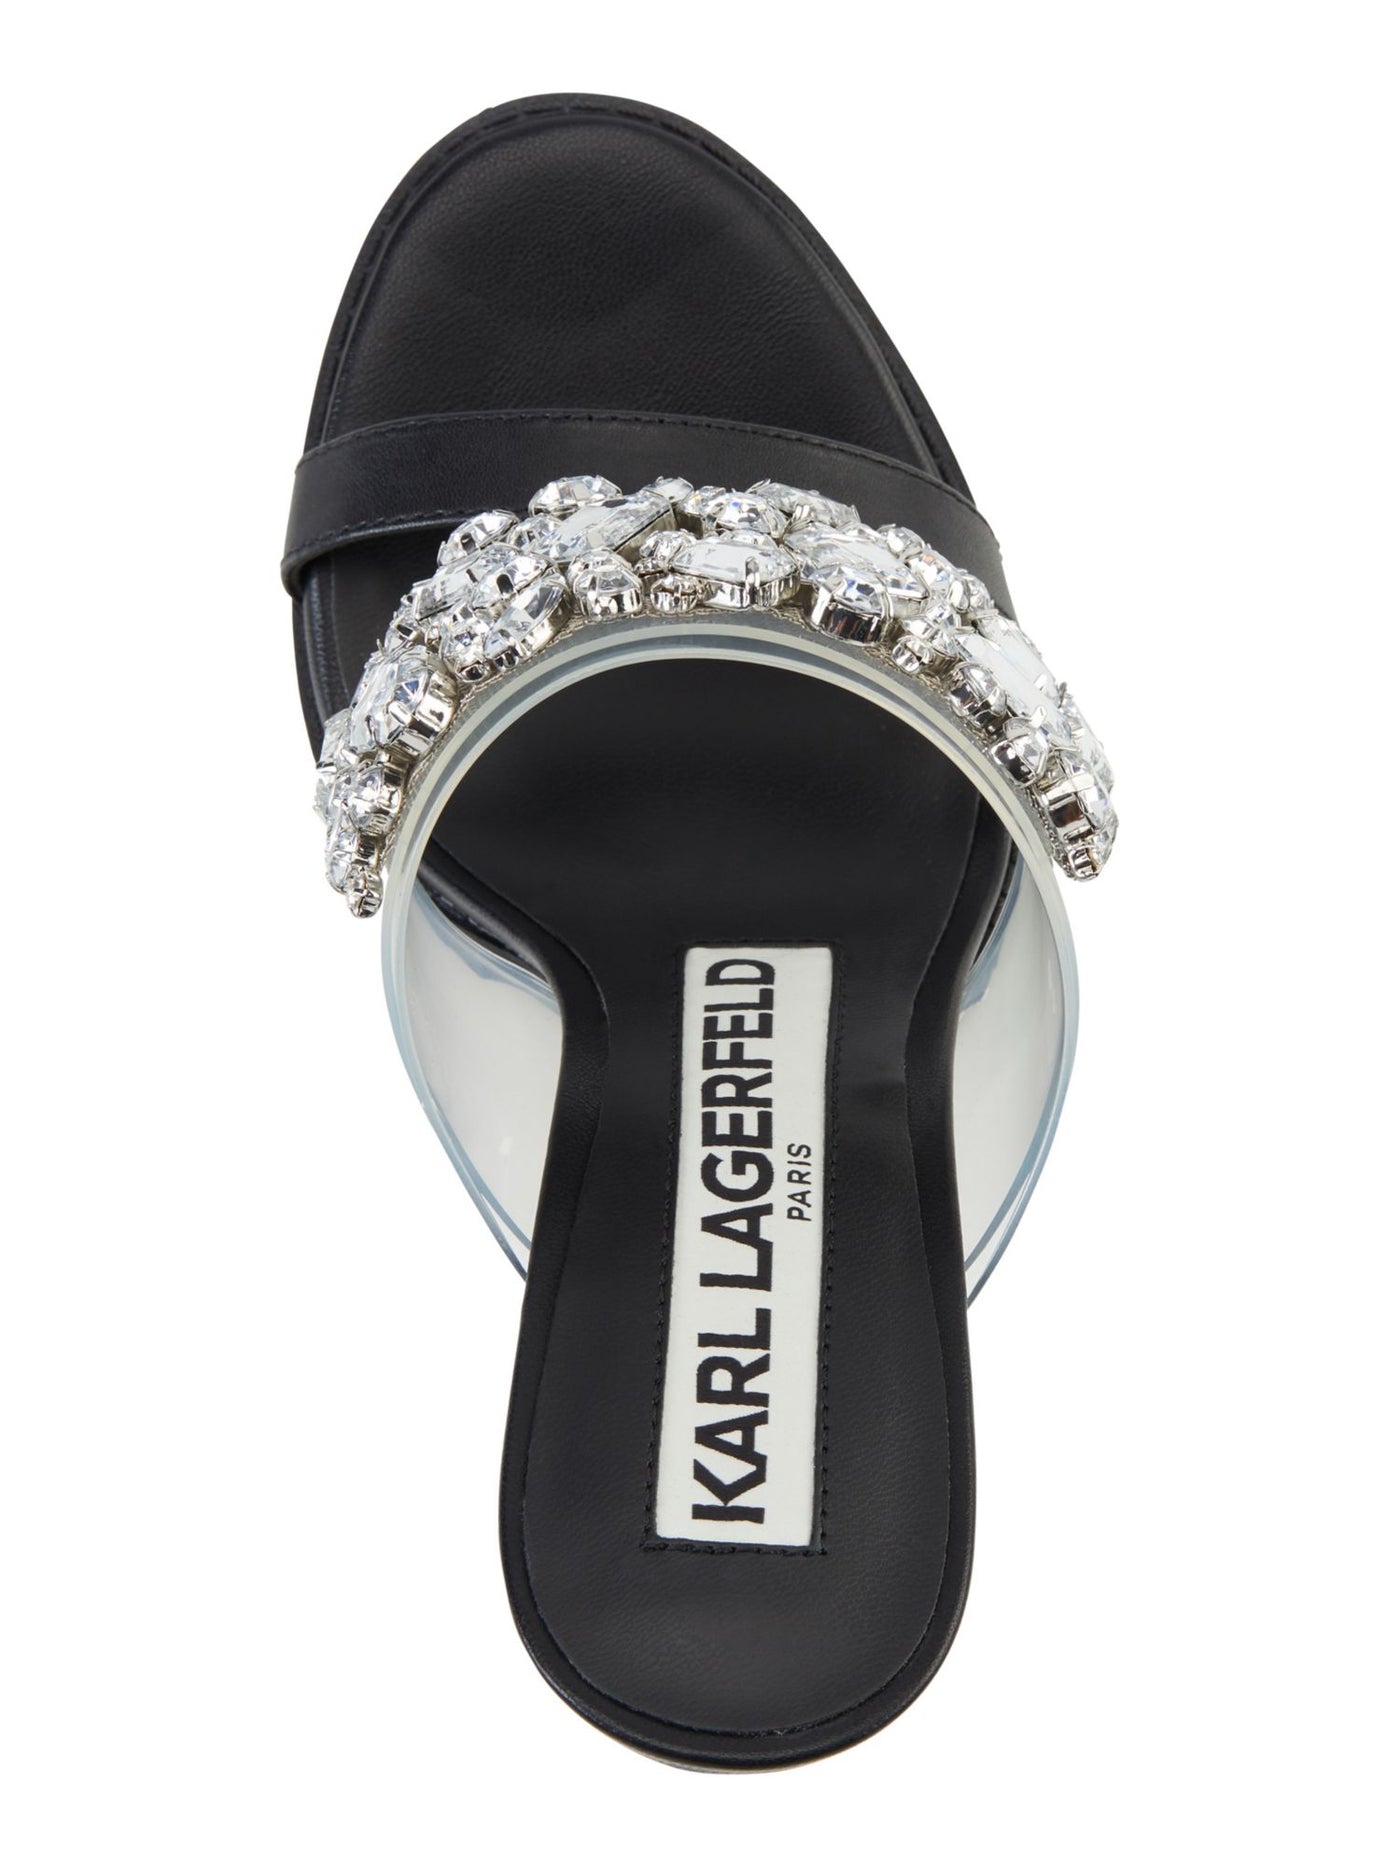 KARL LAGERFELD PARIS Womens Black Embellished Bedika Open Toe Slip On Leather Dress Heeled Sandal 5.5